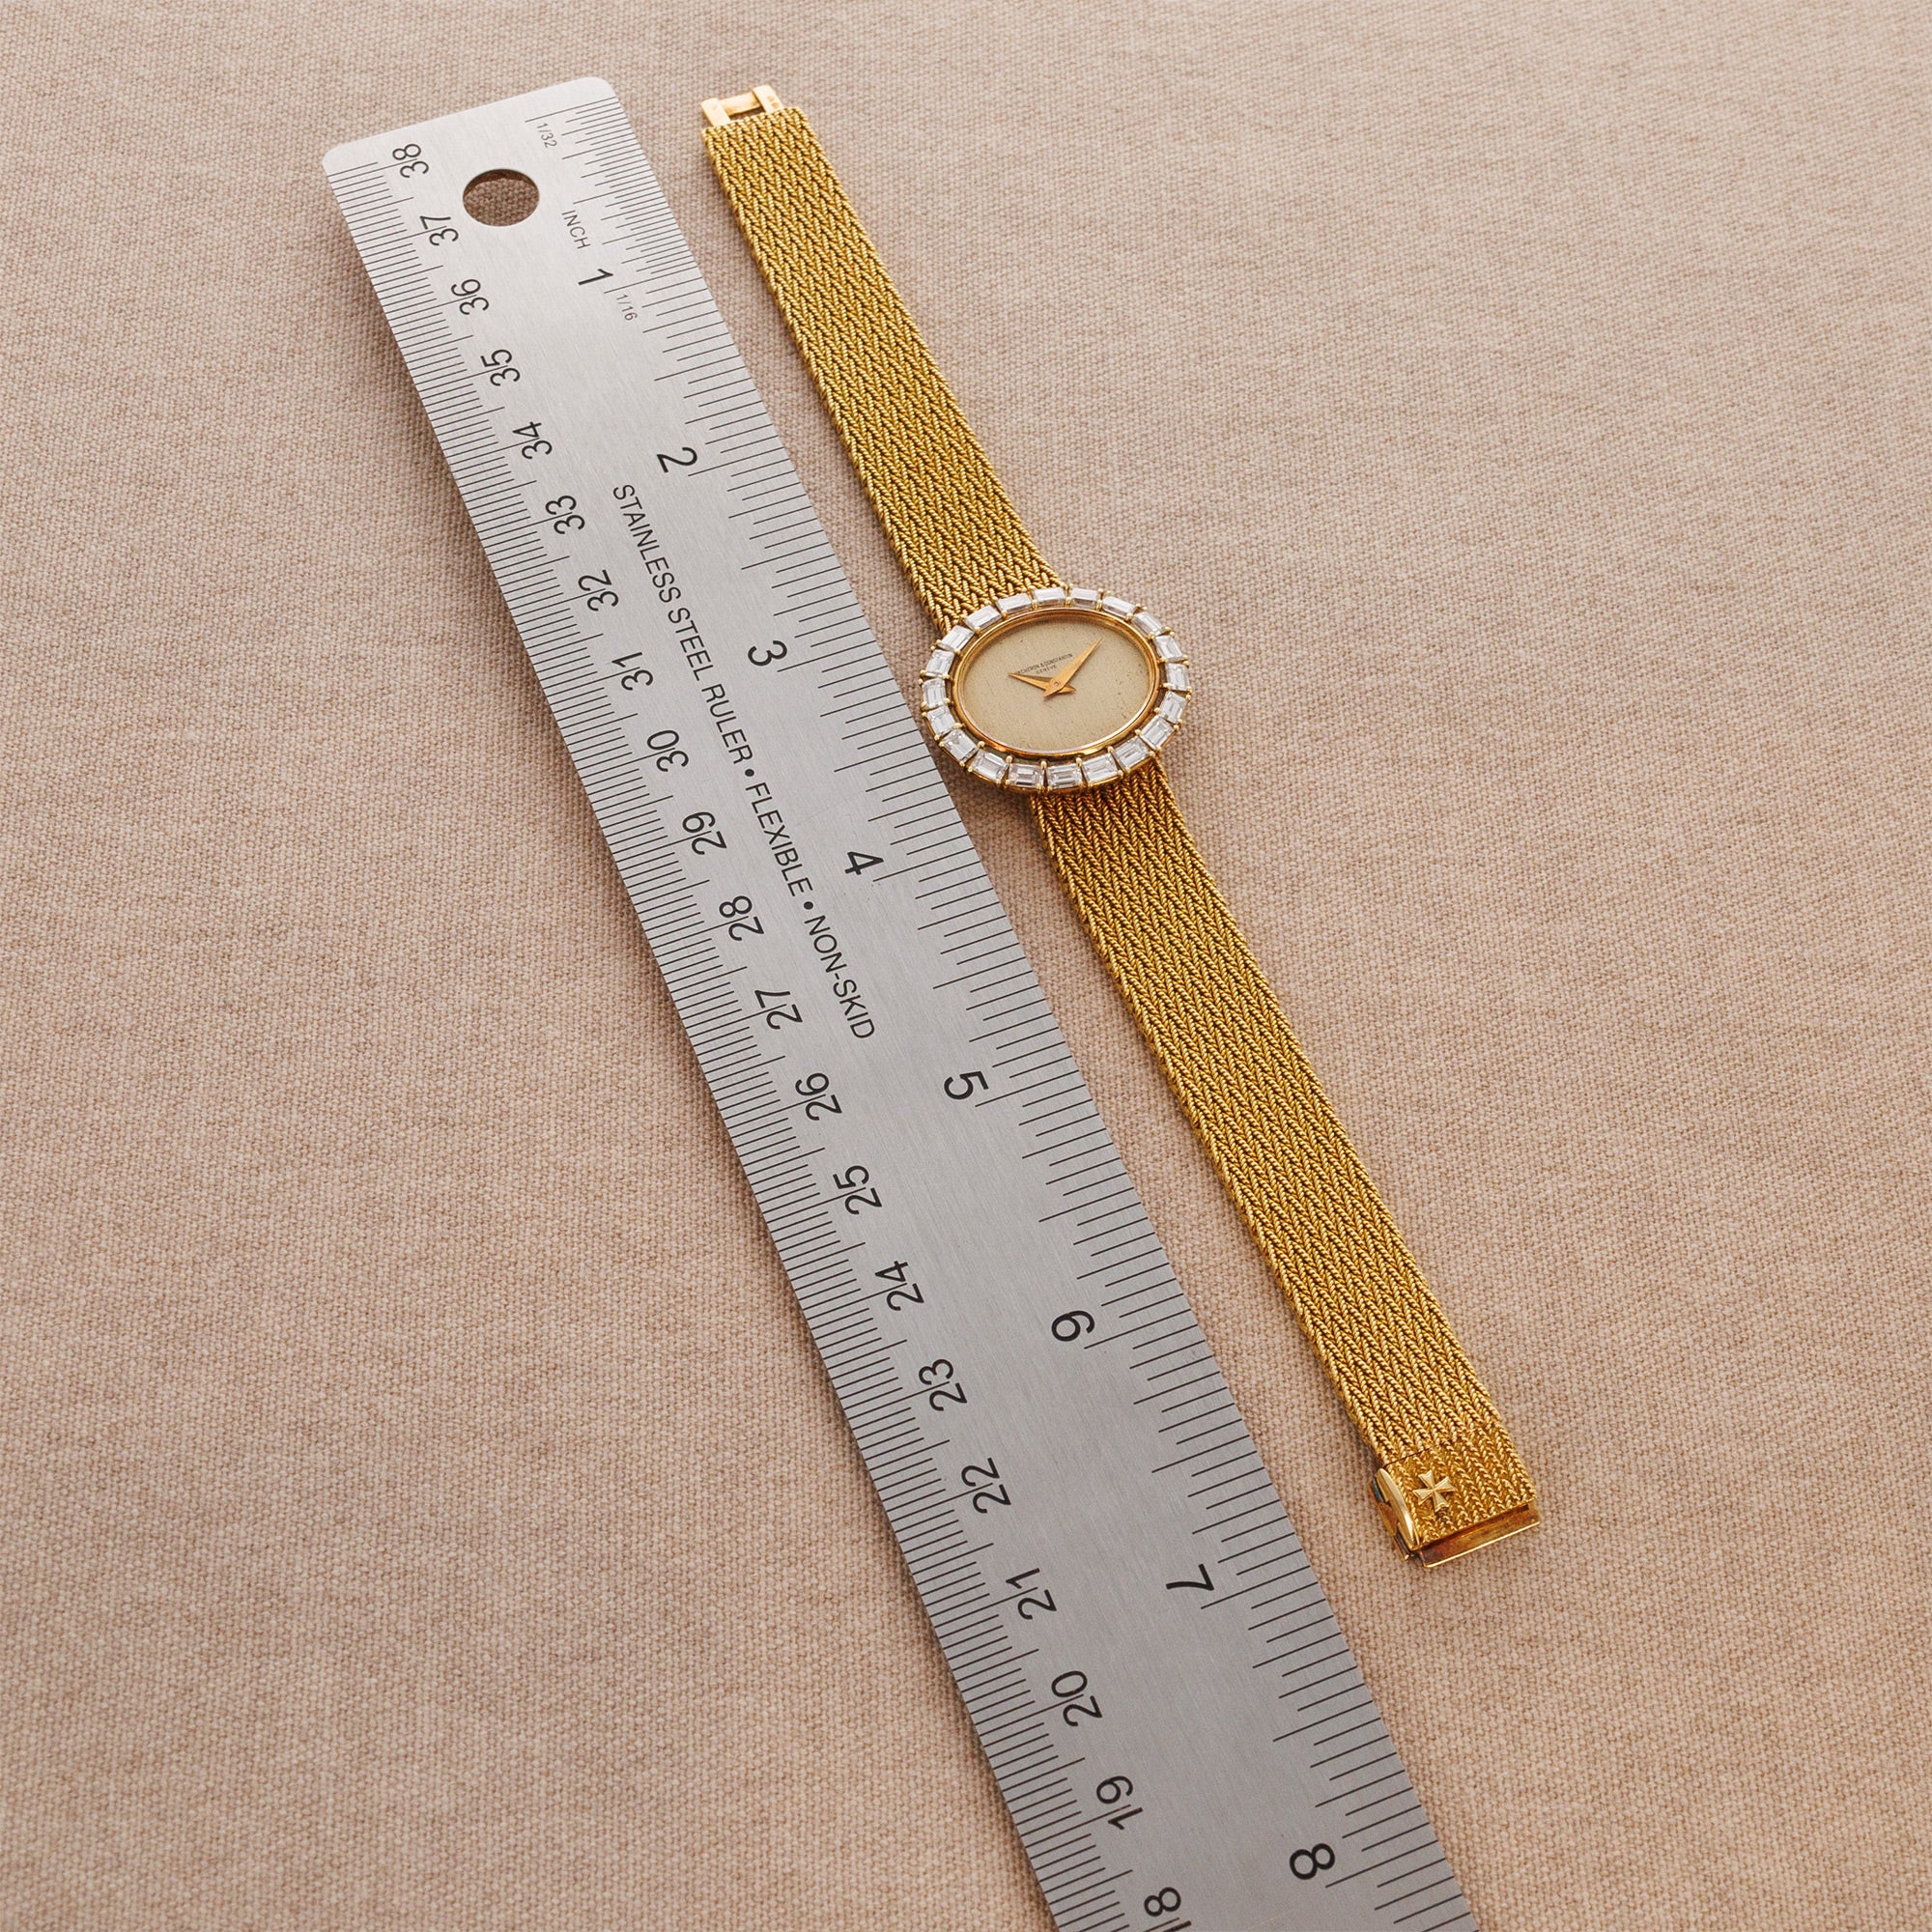 Vacheron Constantin - Vacheron Constantin Yellow Gold Watch with Baguette Diamonds - The Keystone Watches